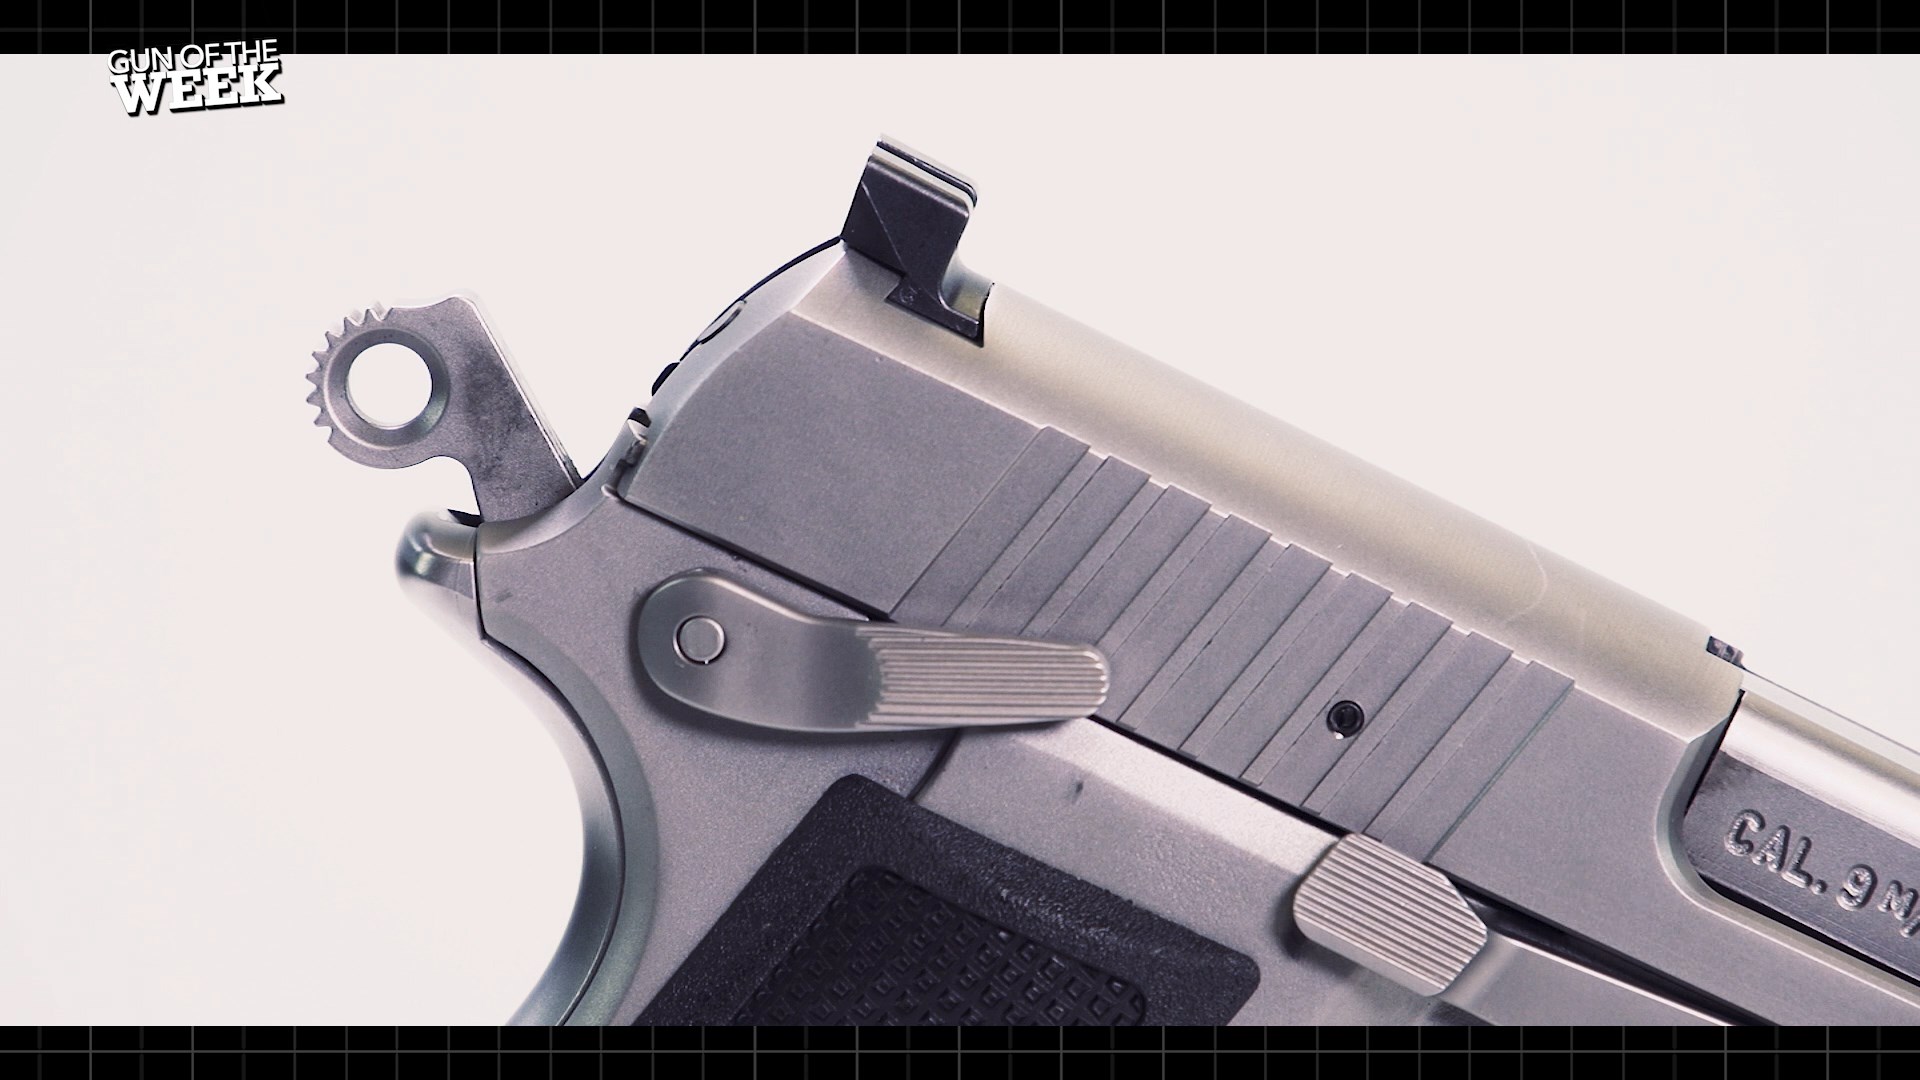 fn america high power pistol stainless steel finish gun closeup hammer spur safety parts rear sight